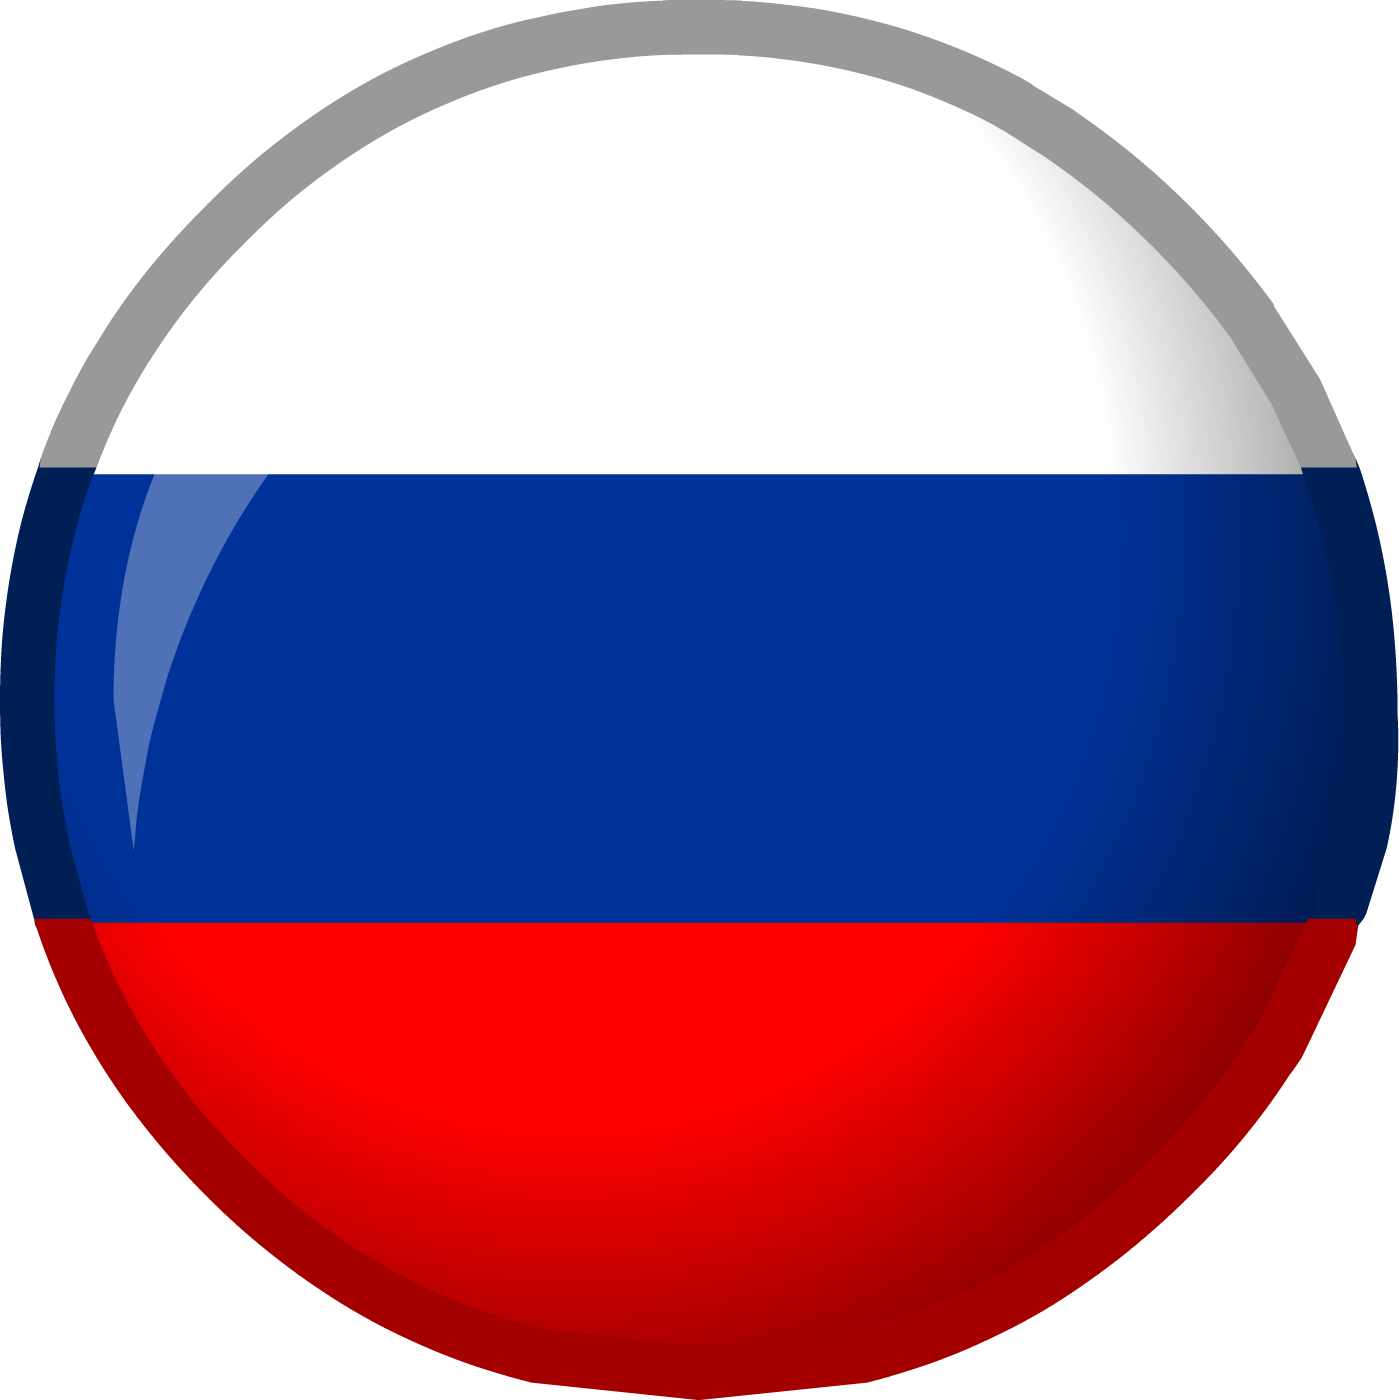 Bandera de Rusia PNG imagen transparente